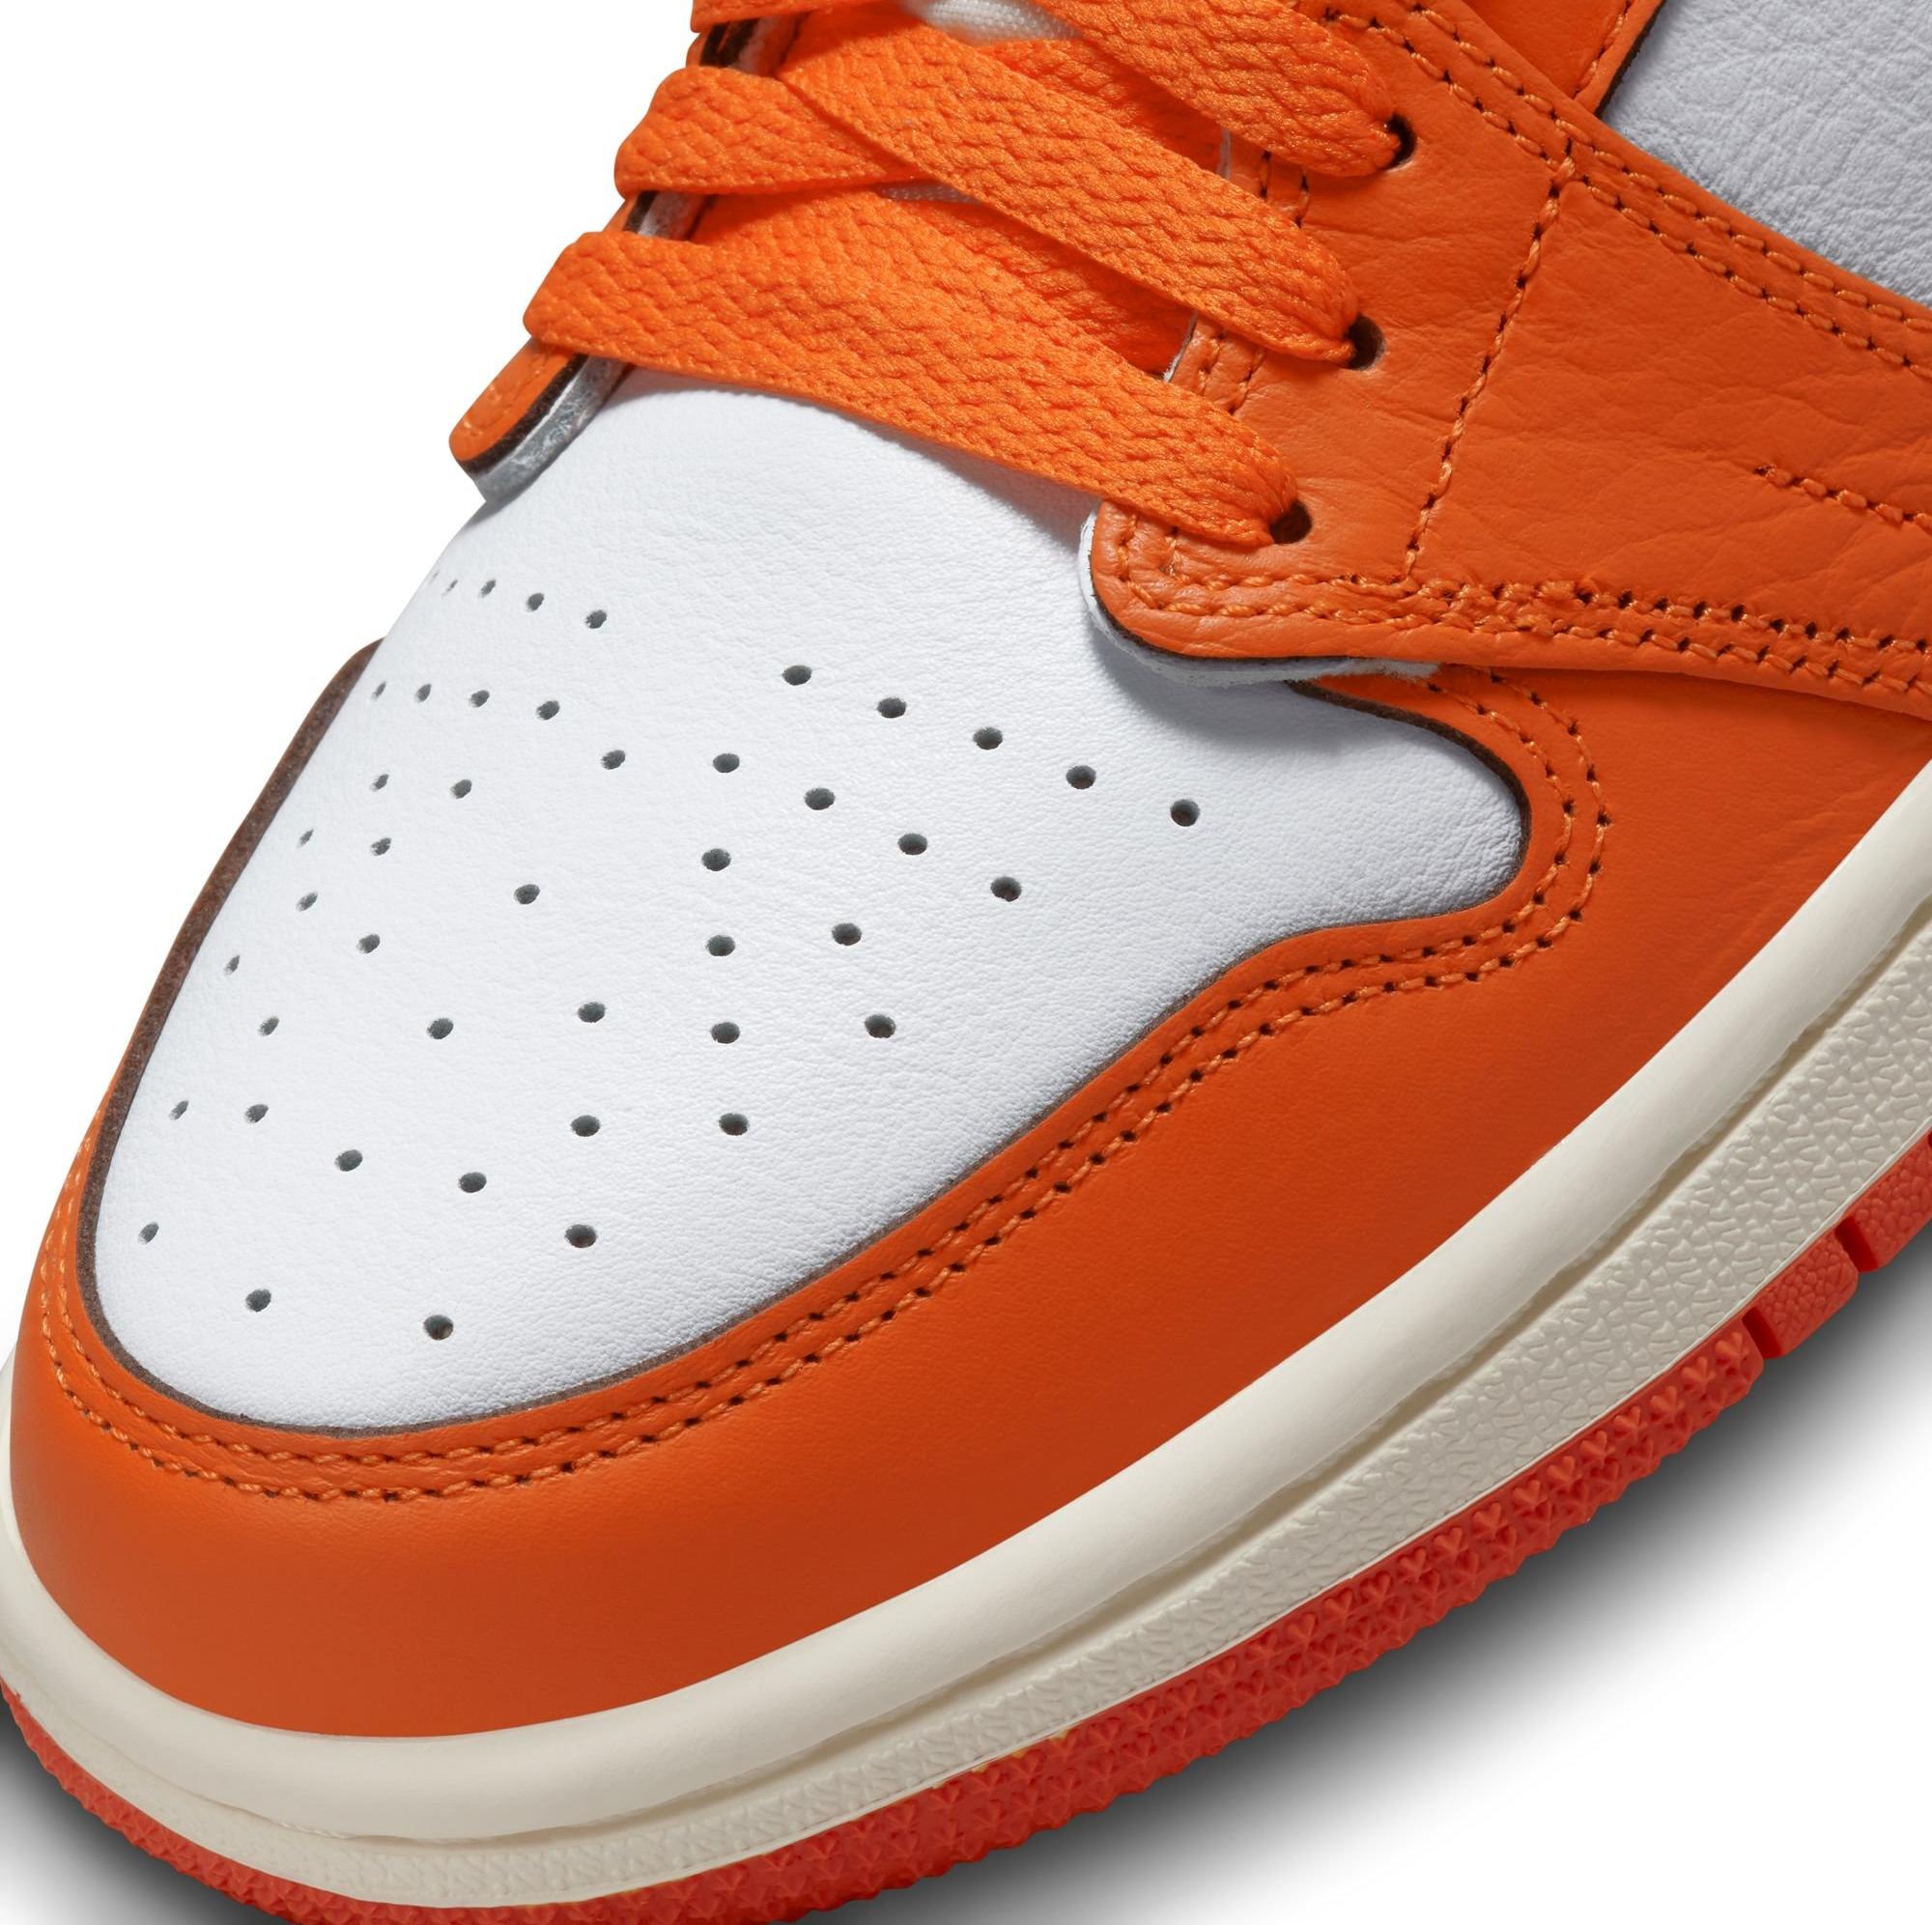 Orange Air Jordan 1 Retro Shoes - Low, Mid, High - Hibbett